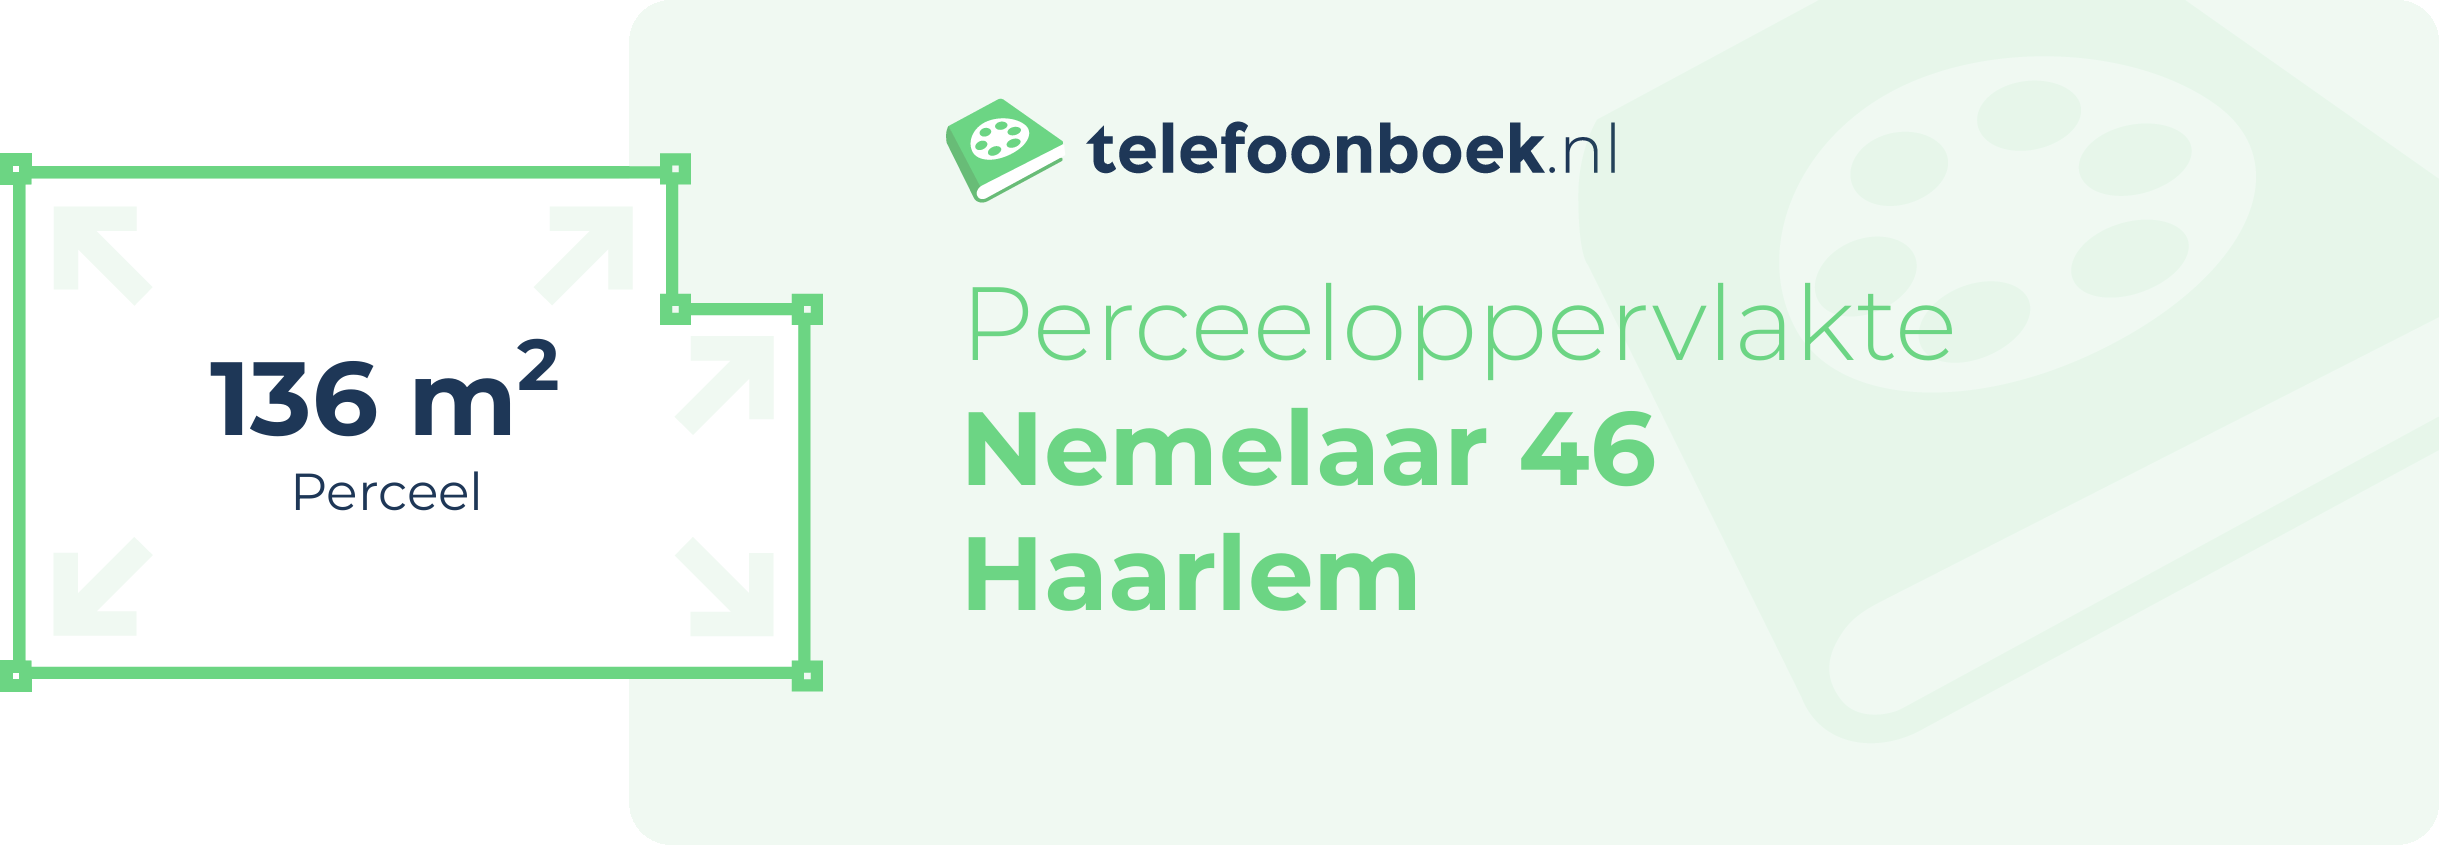 Perceeloppervlakte Nemelaar 46 Haarlem